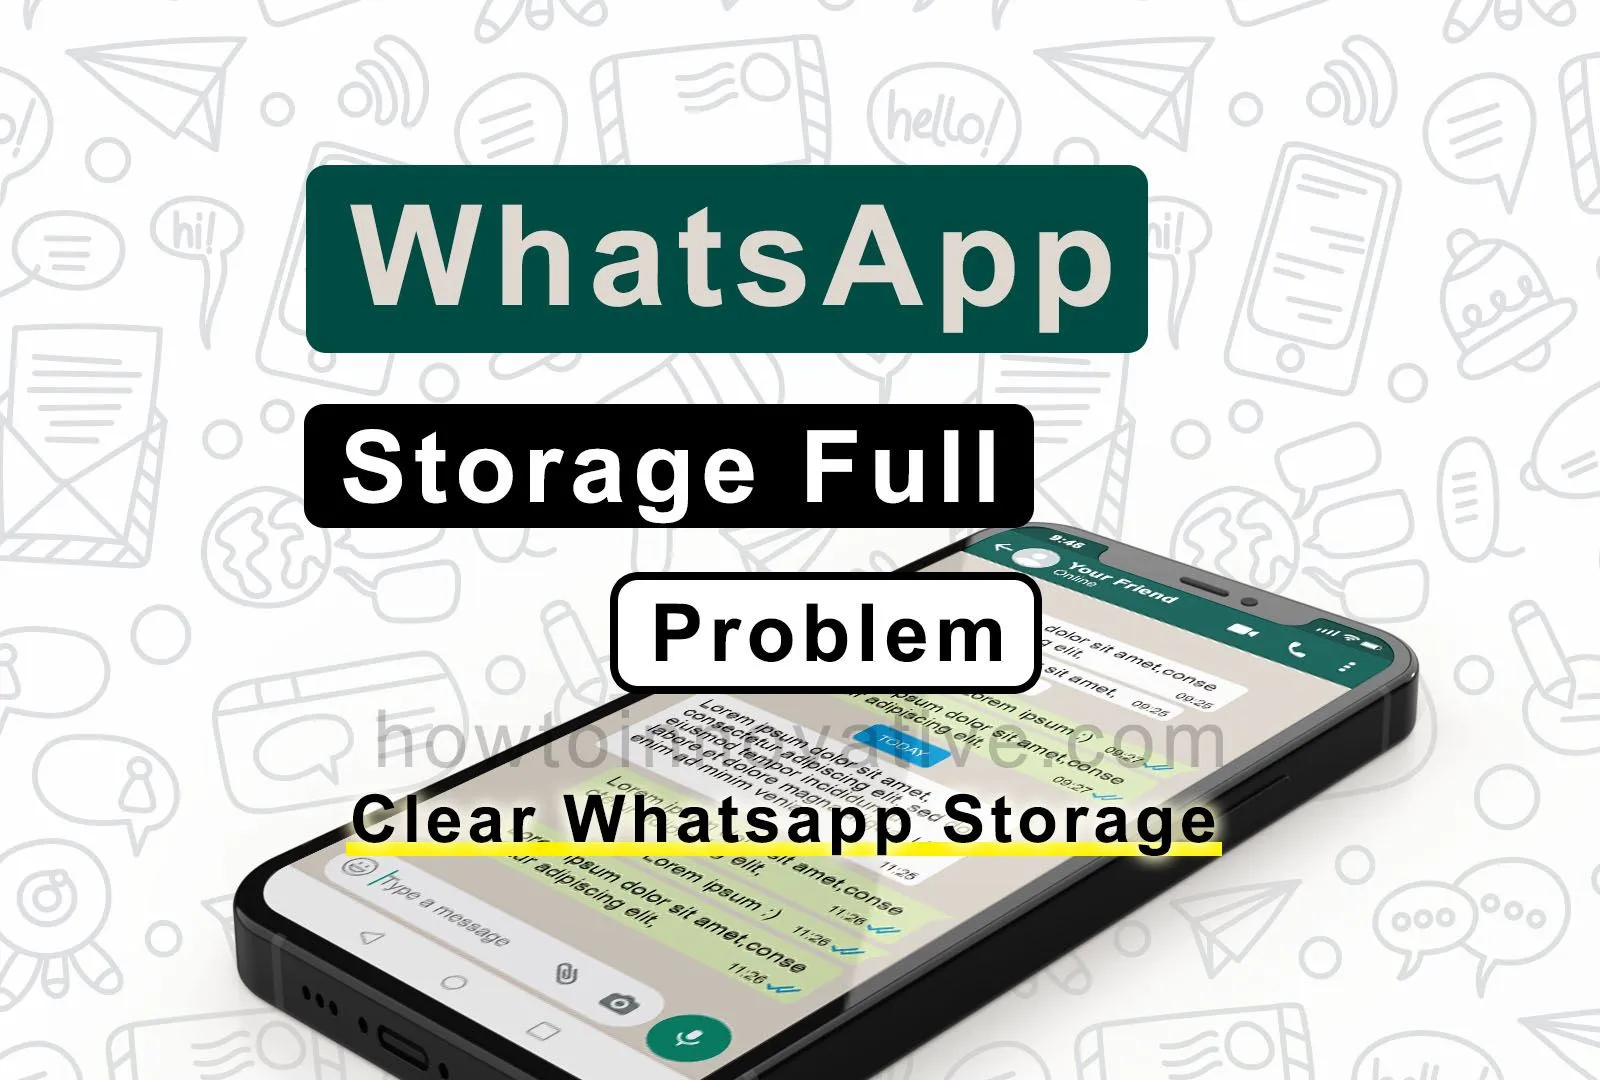 WhatsApp Storage Full Problem - Clear WhatsApp Storage 2023